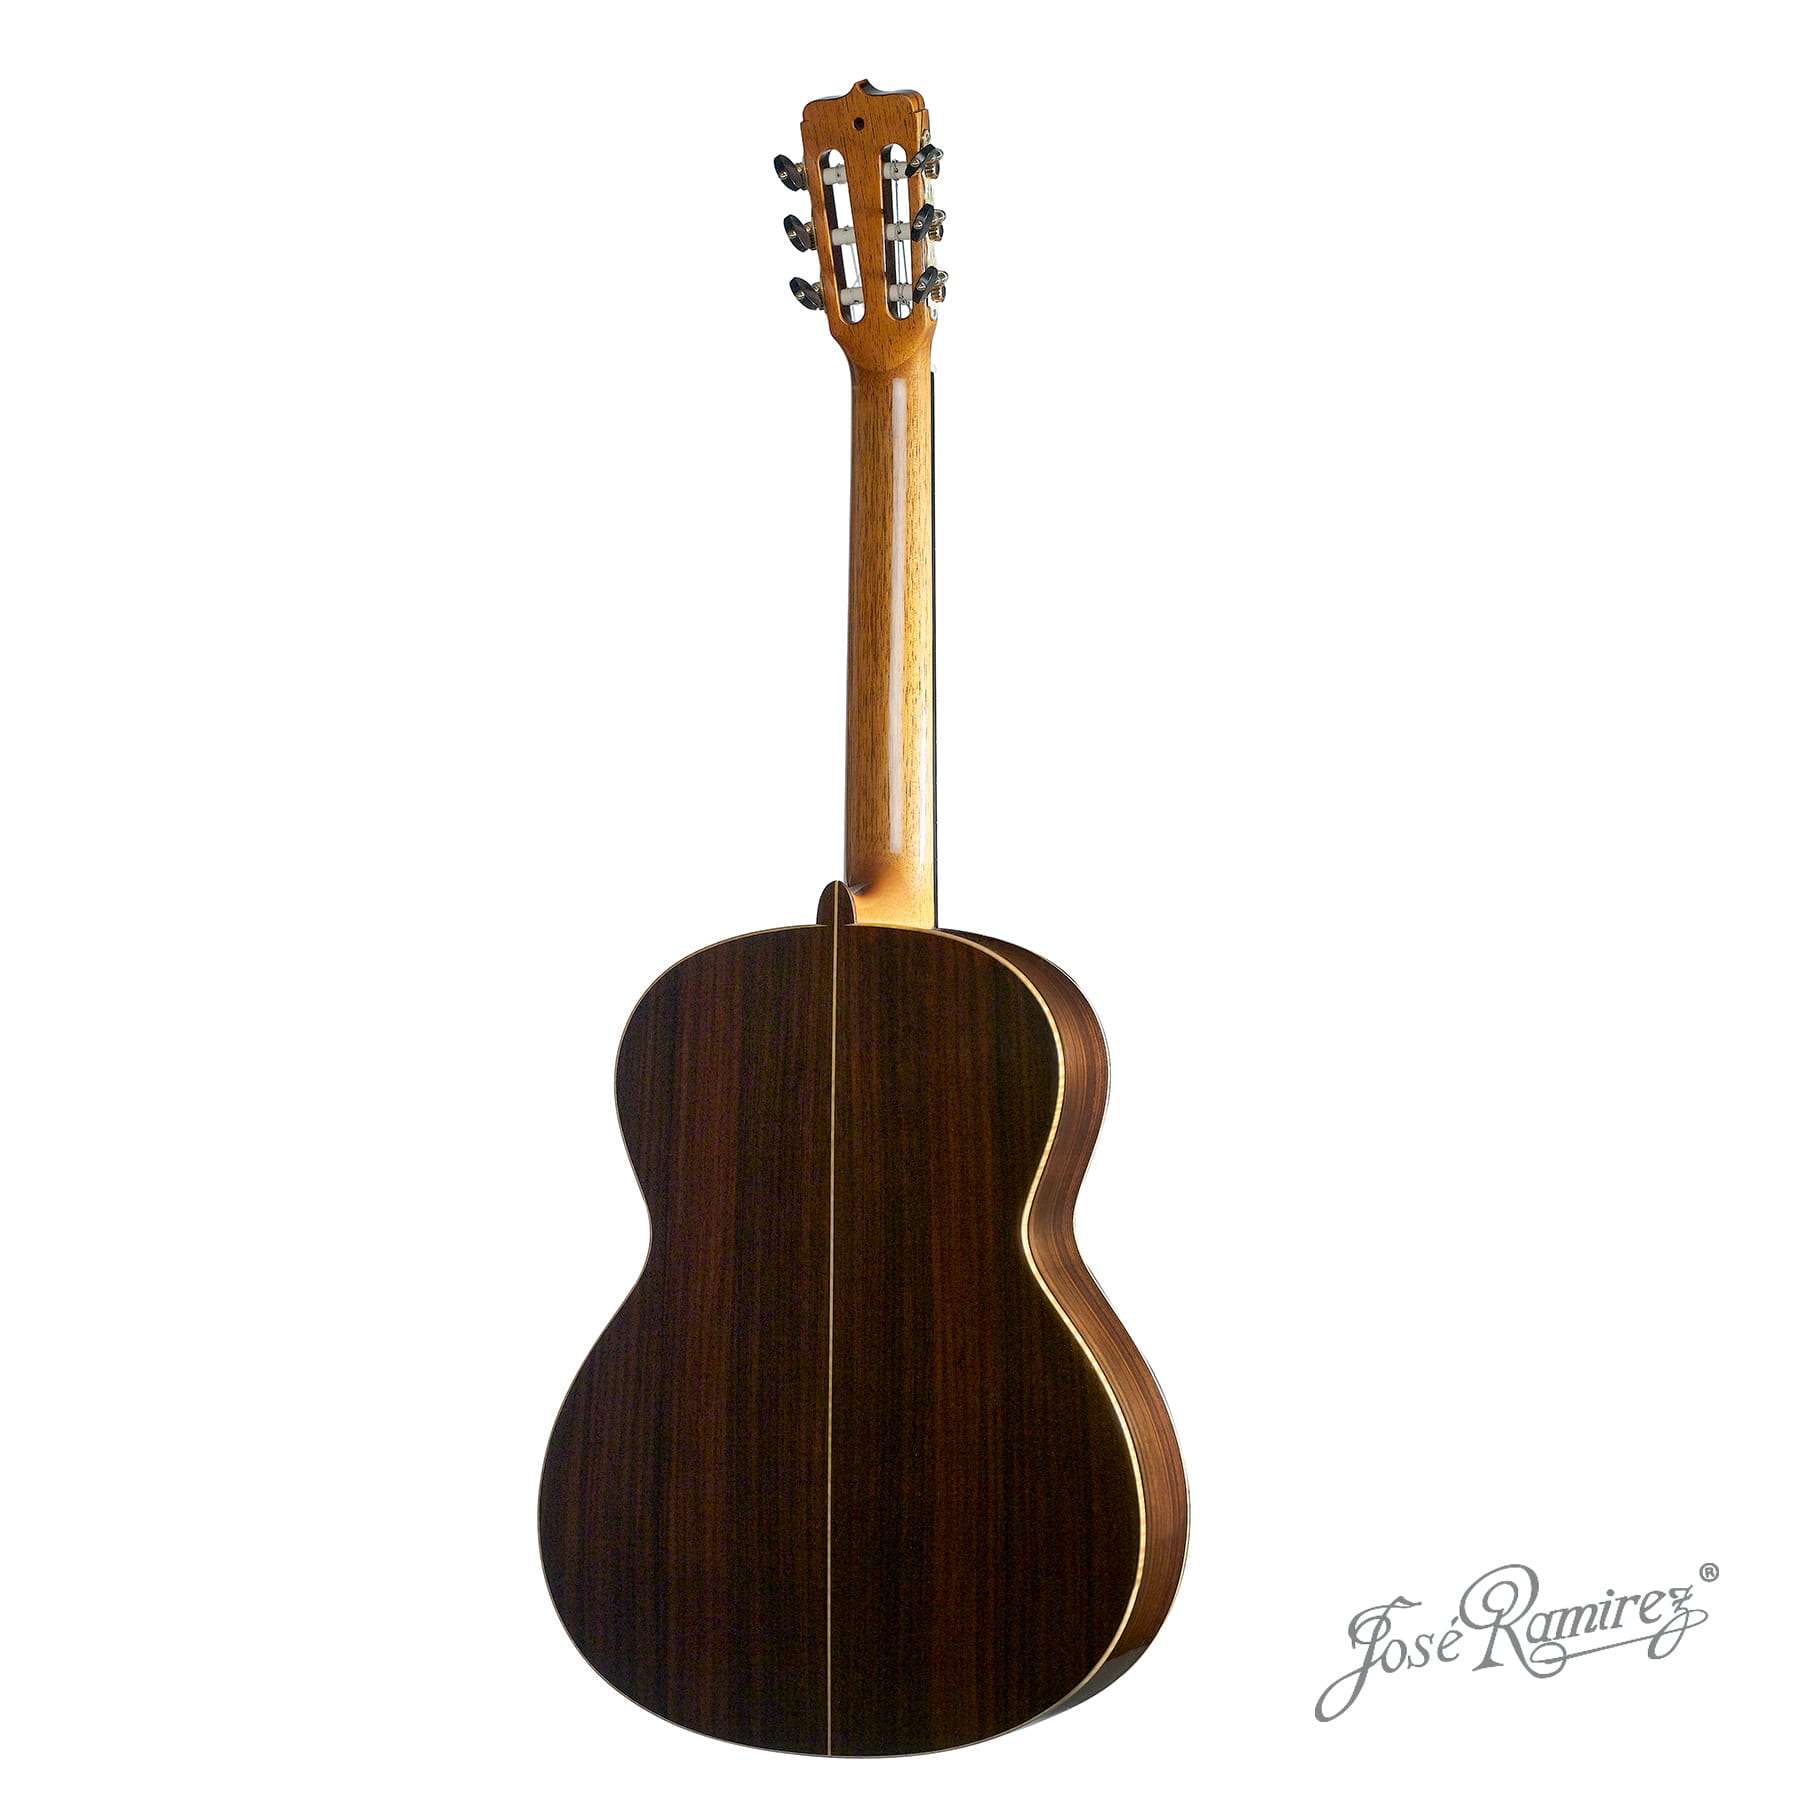 Mangoré guitar by Ramírez Guitars.